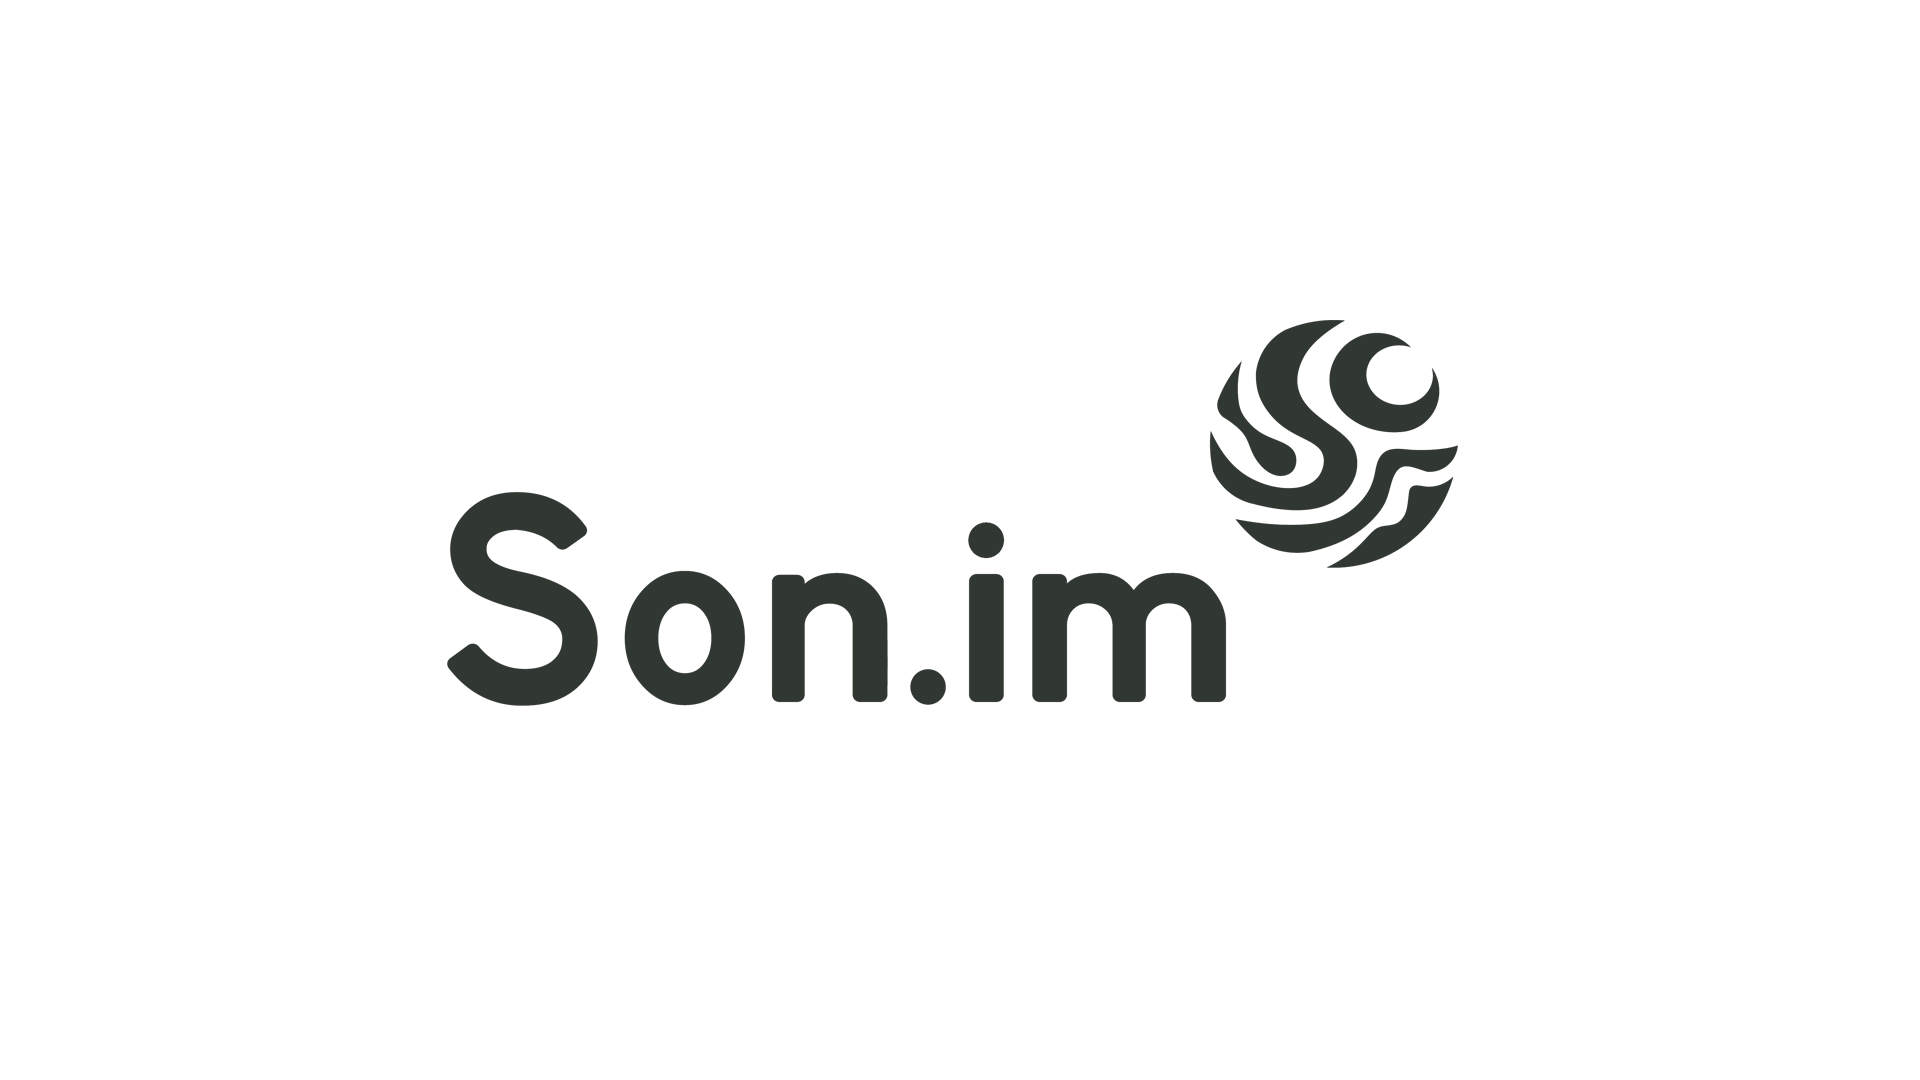 Sonim logo animated GIF slow